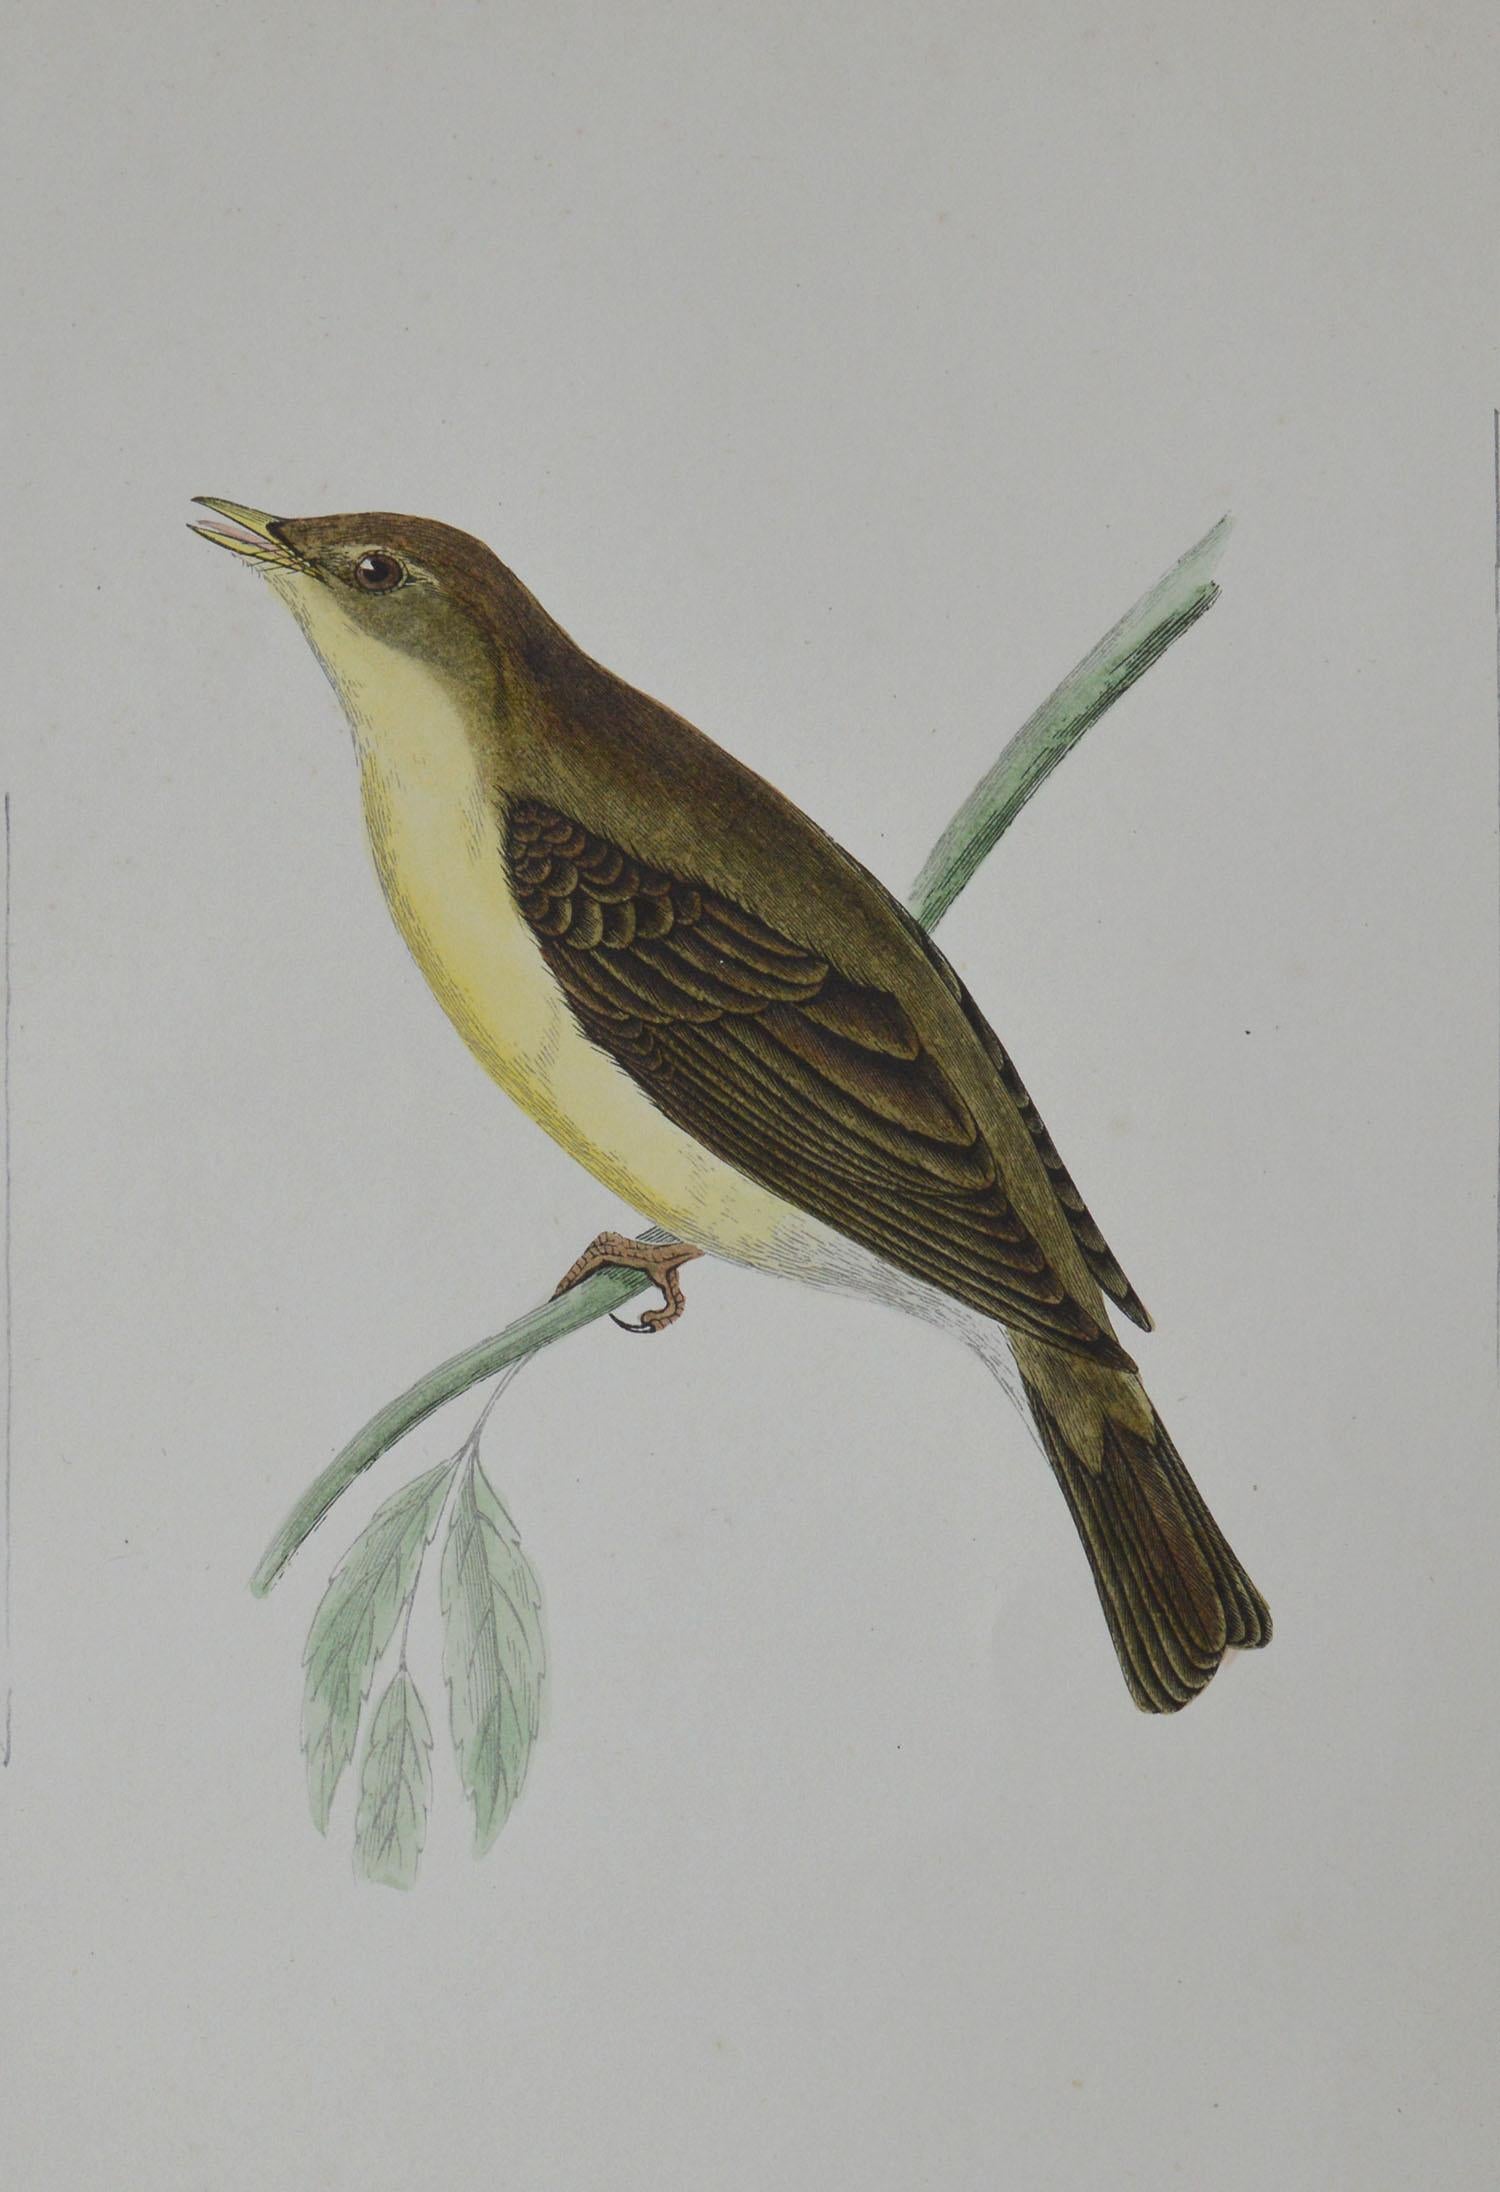 Folk Art Original Antique Bird Print, the Willow Warbler, circa 1850